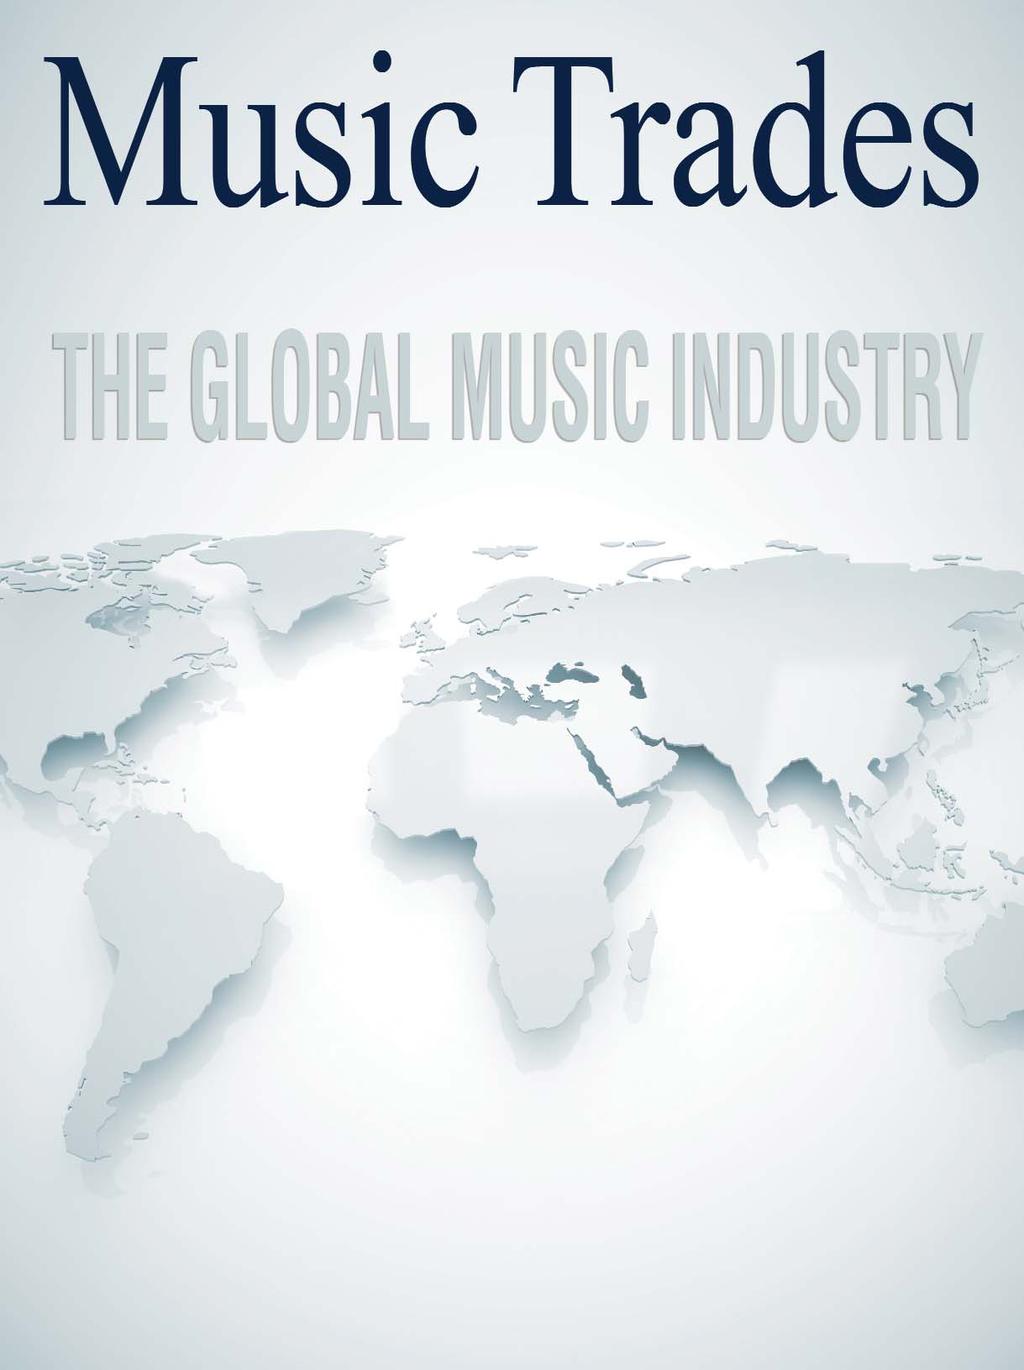 www.musictrades.